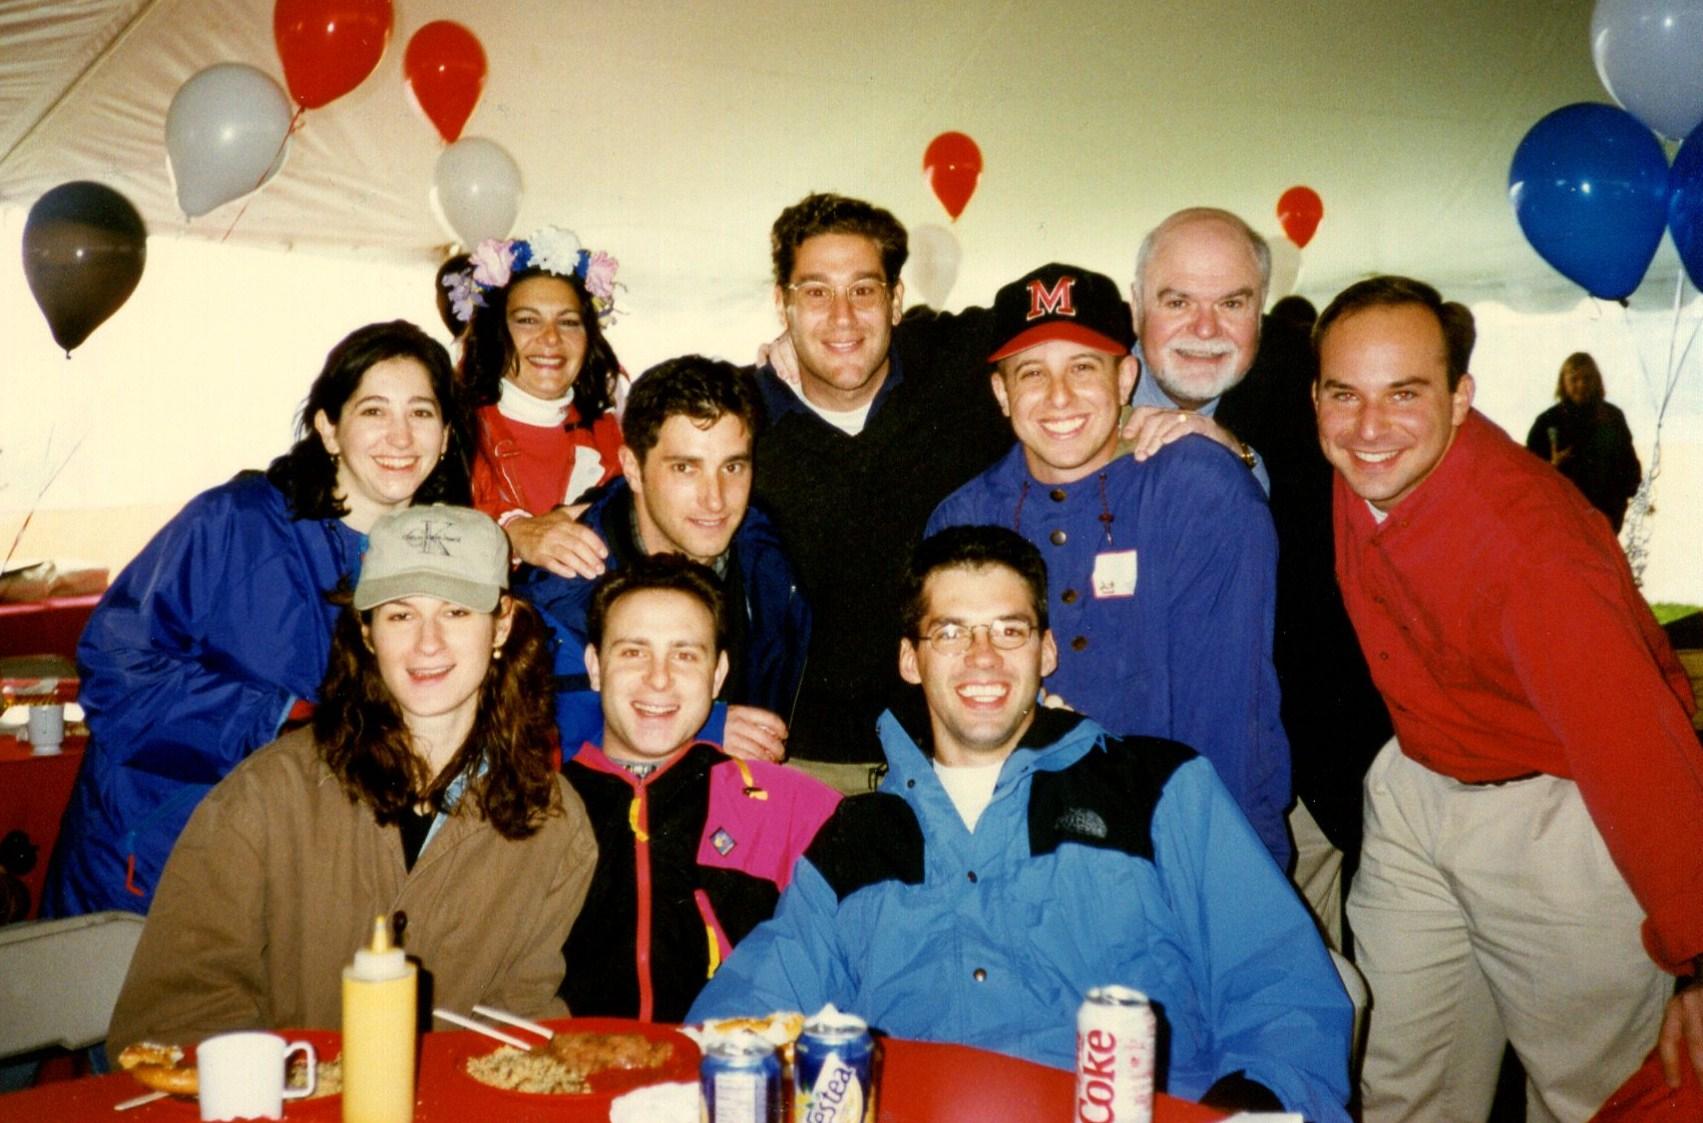 ODK Alumni at Homecoming in 1996